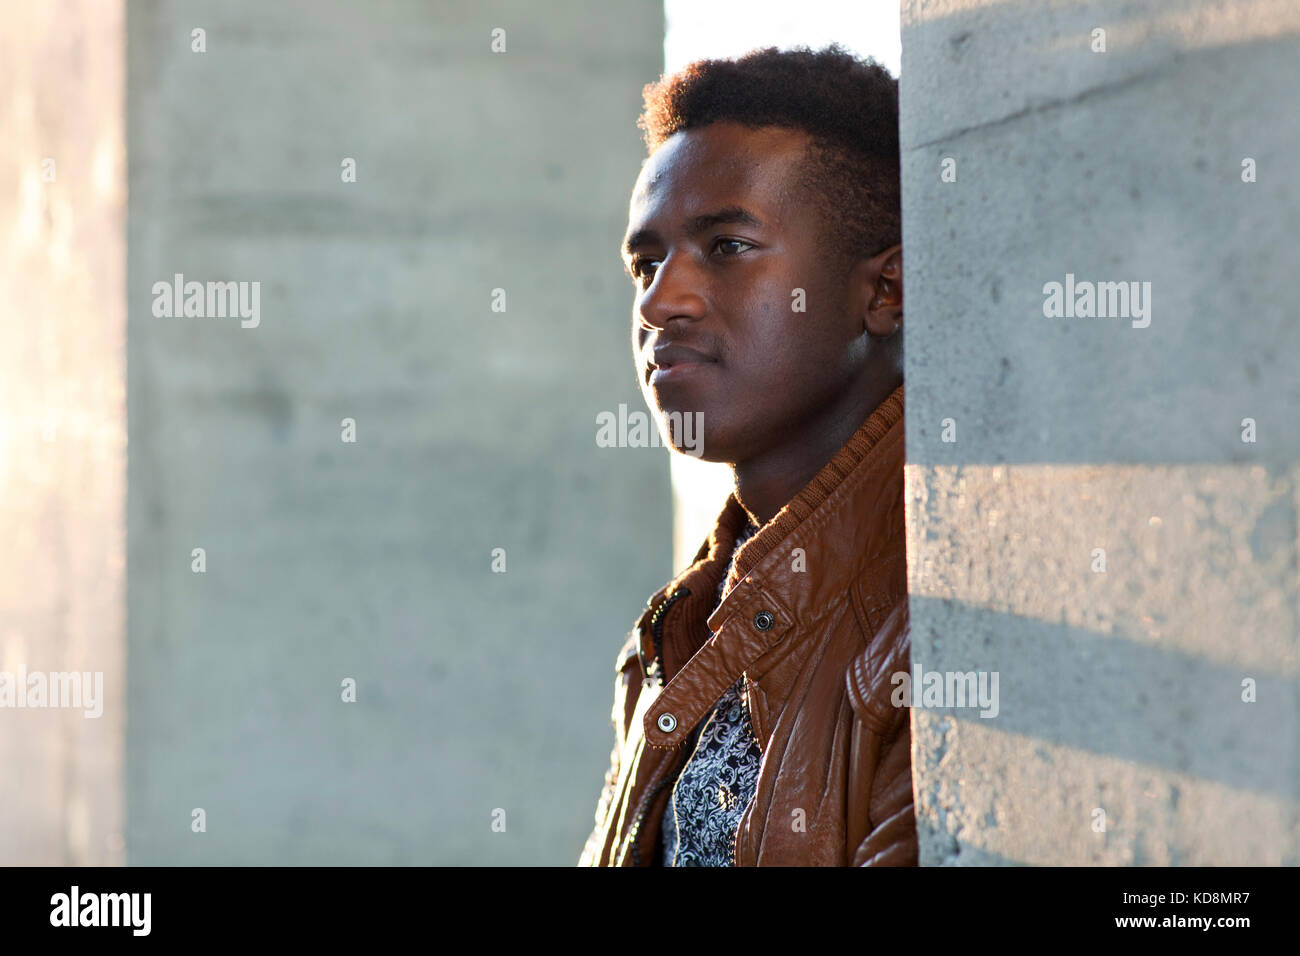 Handsome young black man stands in sunlight between concrete pillars Stock Photo